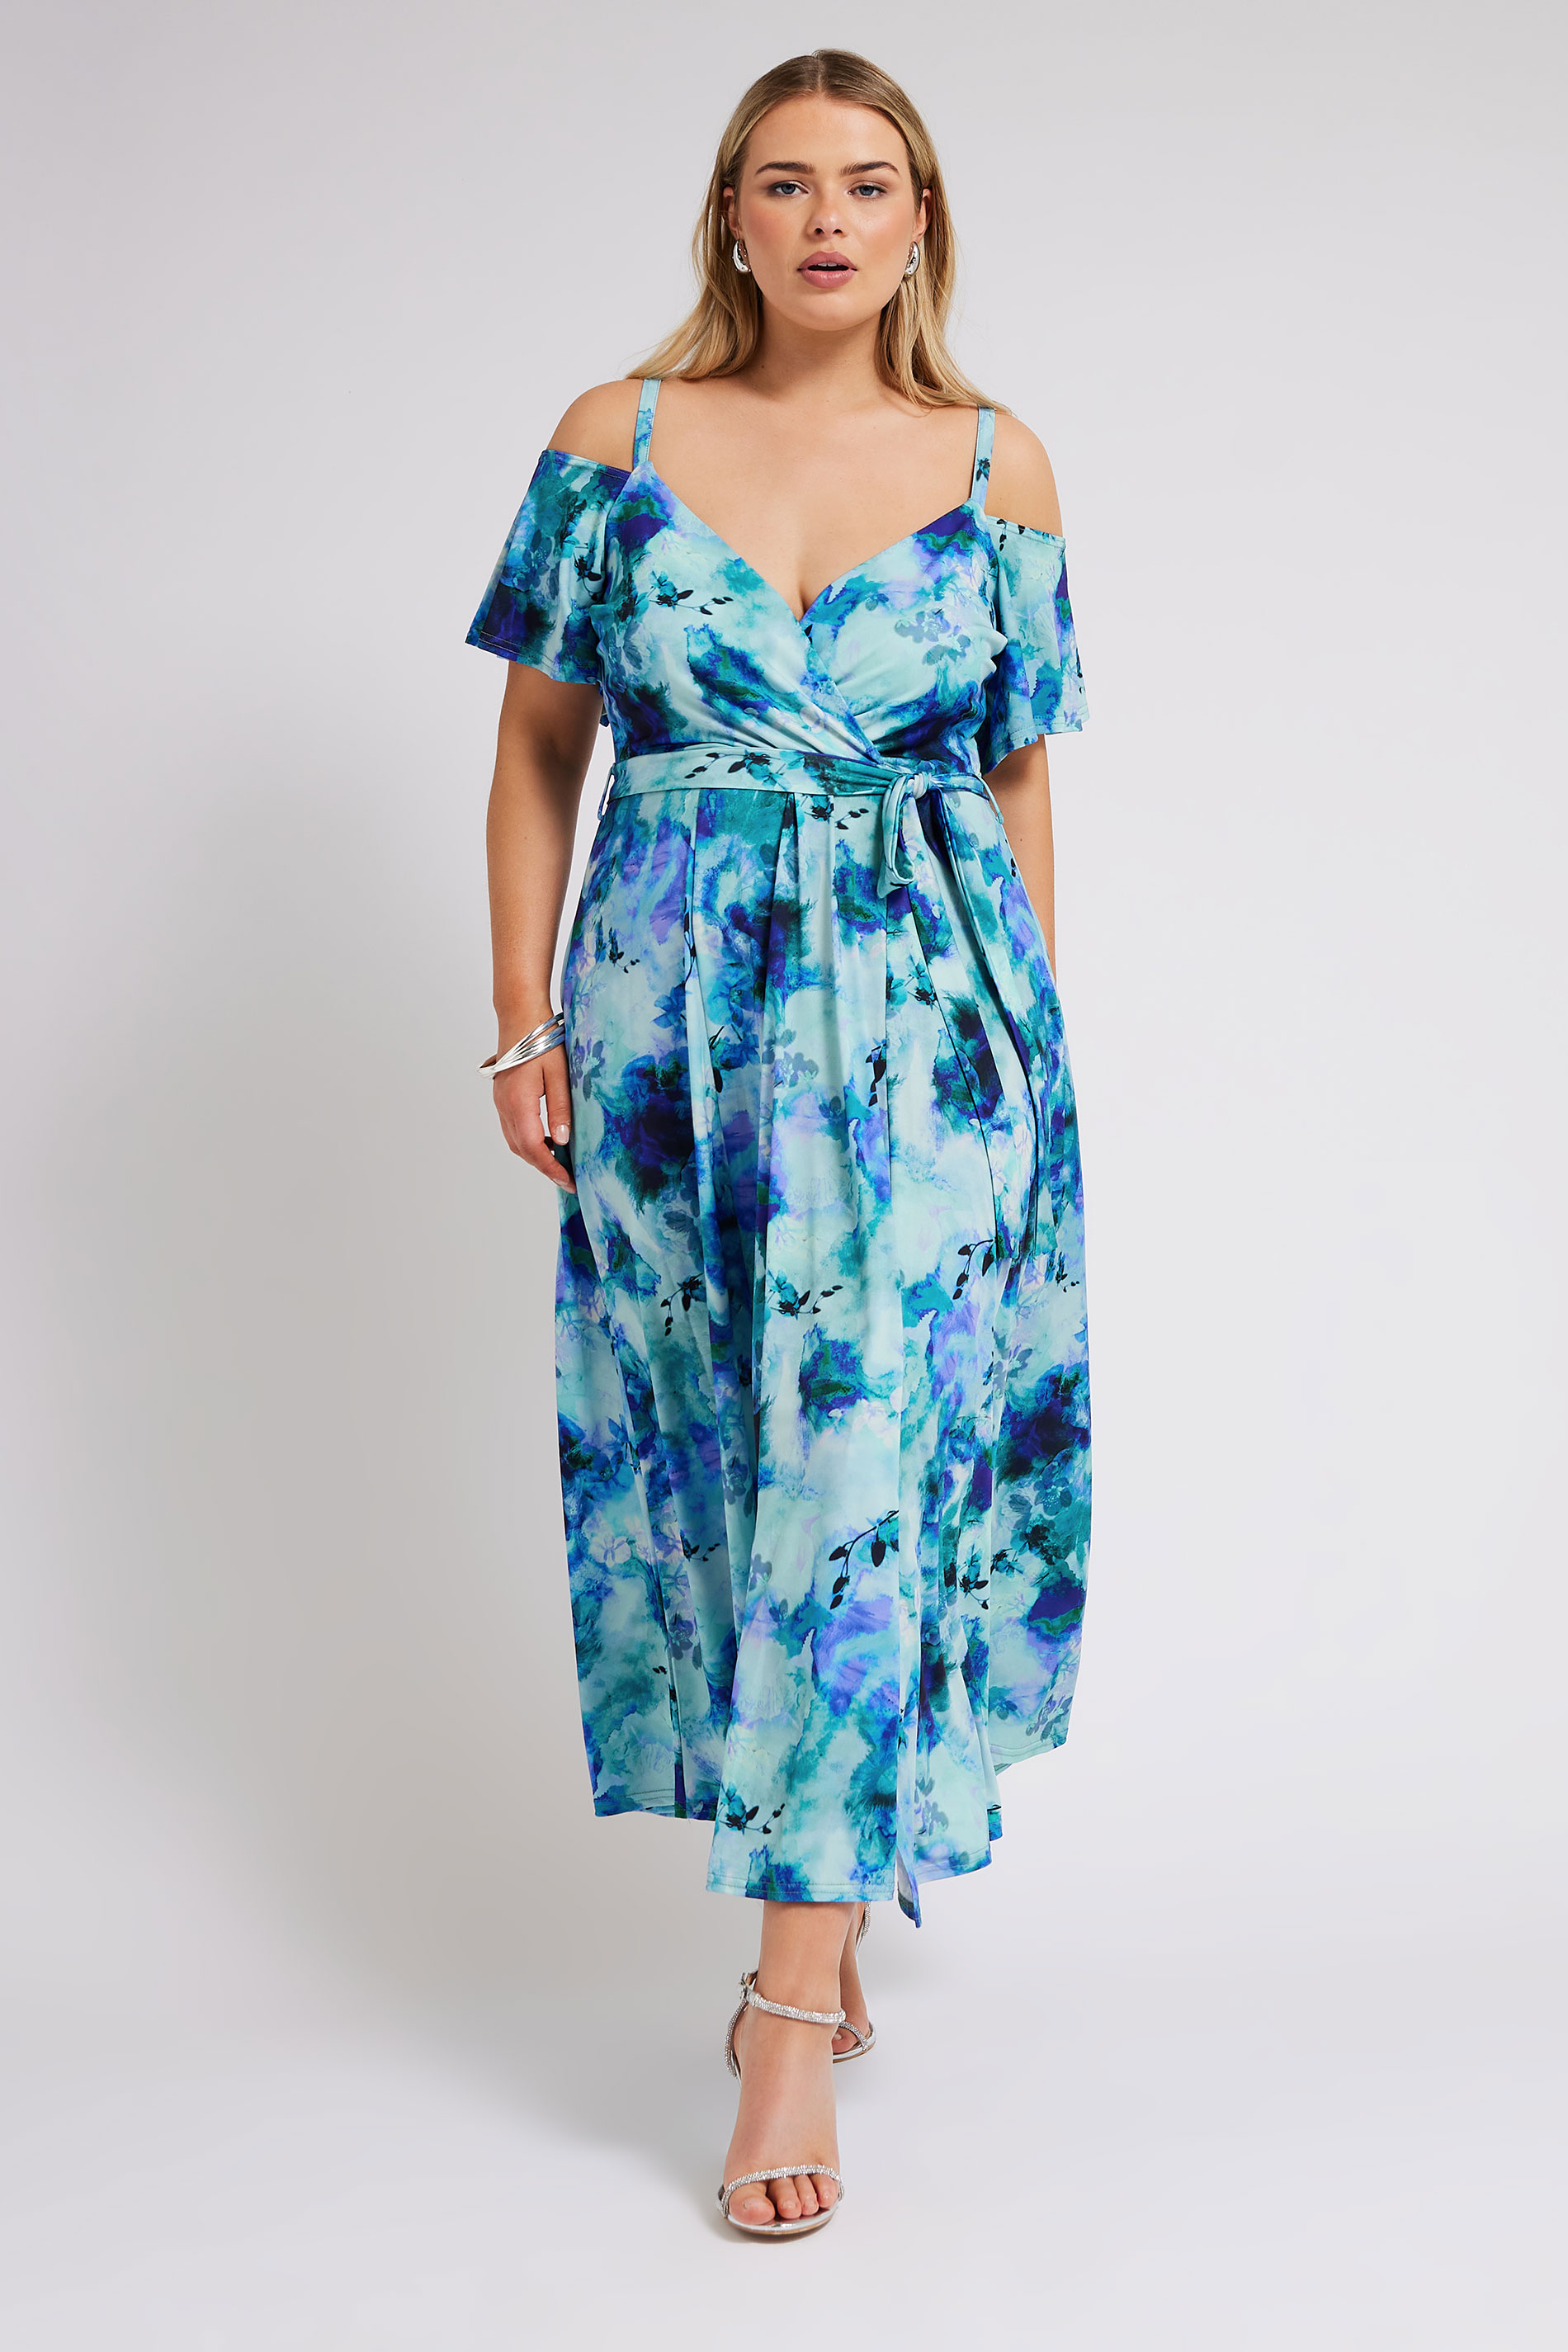 YOURS LONDON Plus Size Blue Floral Print Cold Shoulder Dress | Yours Clothing 2